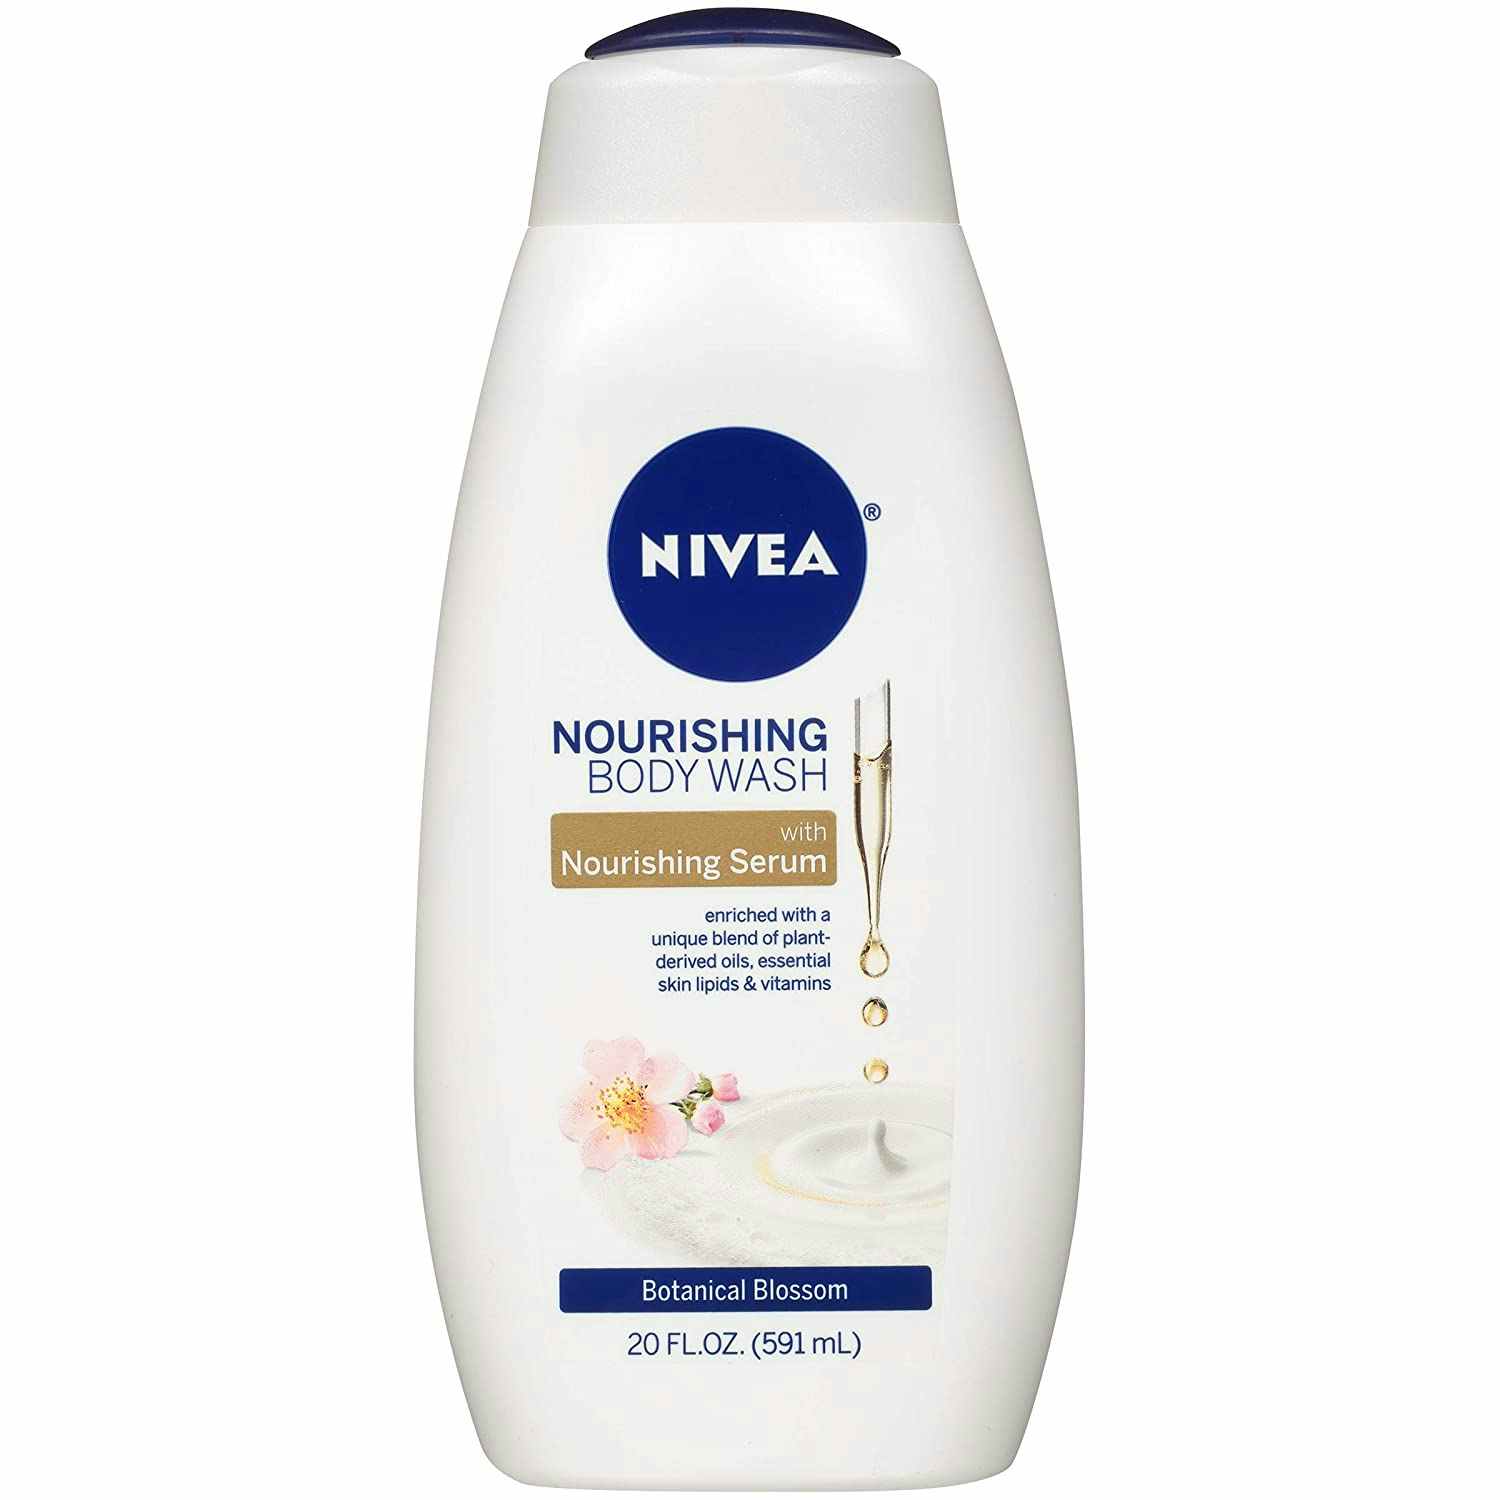 A bottle of Nivea body wash.